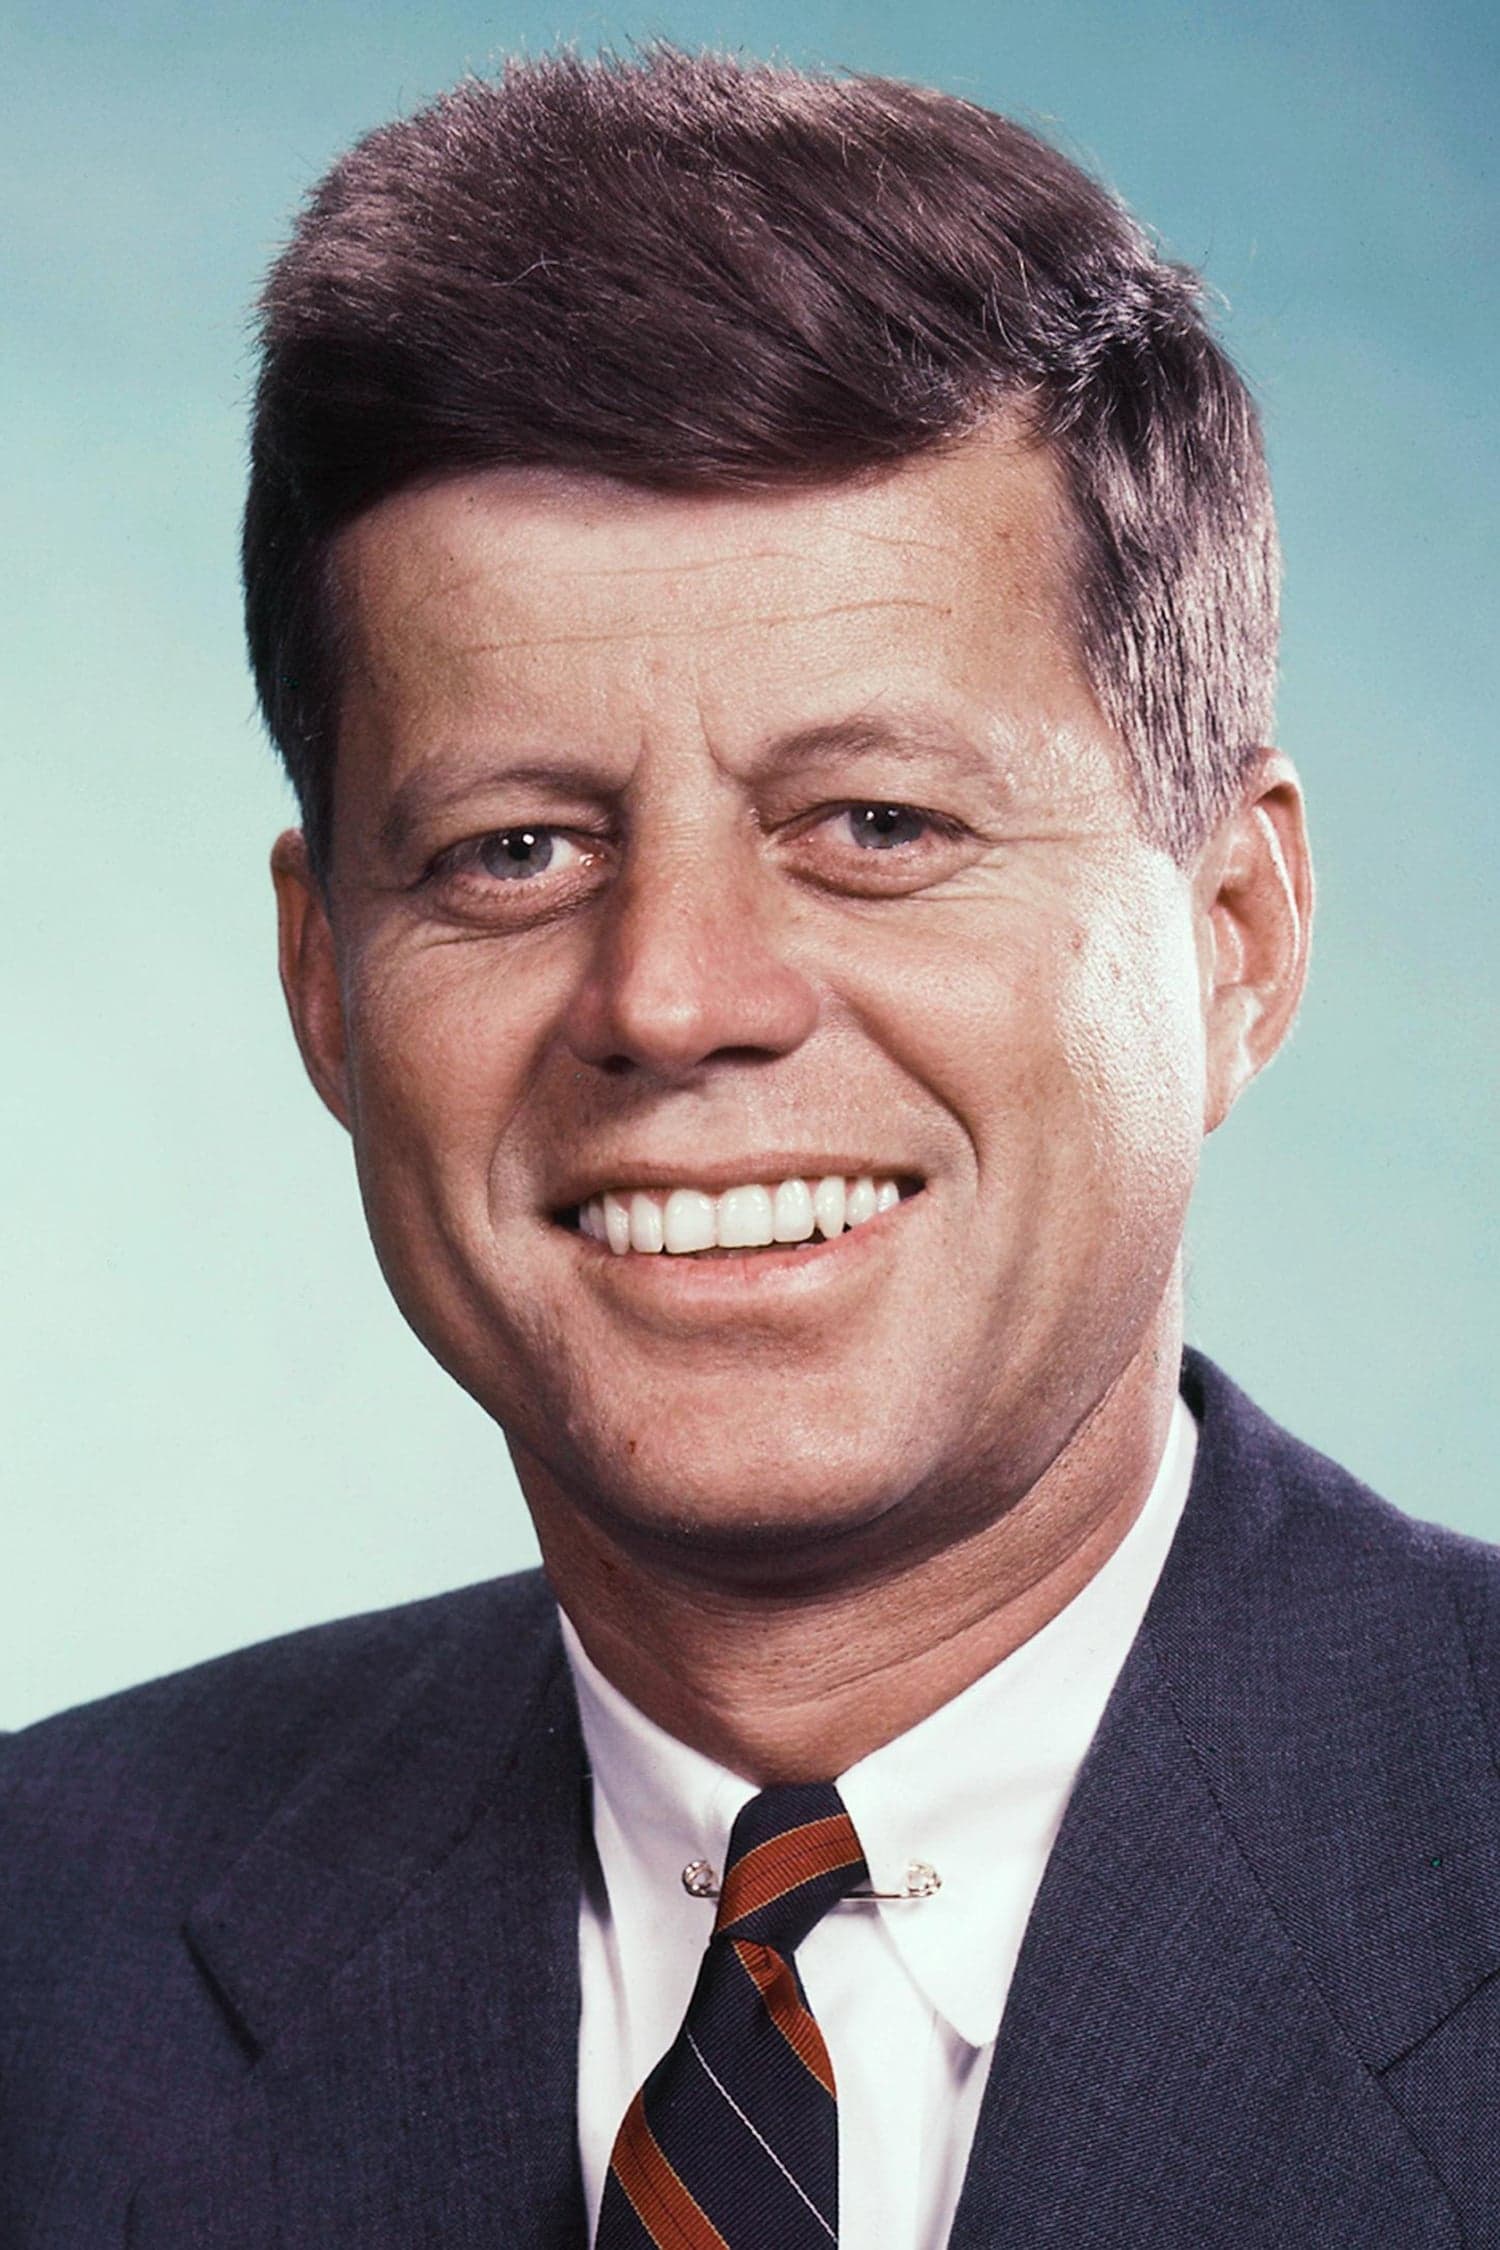 John F. Kennedy | Self